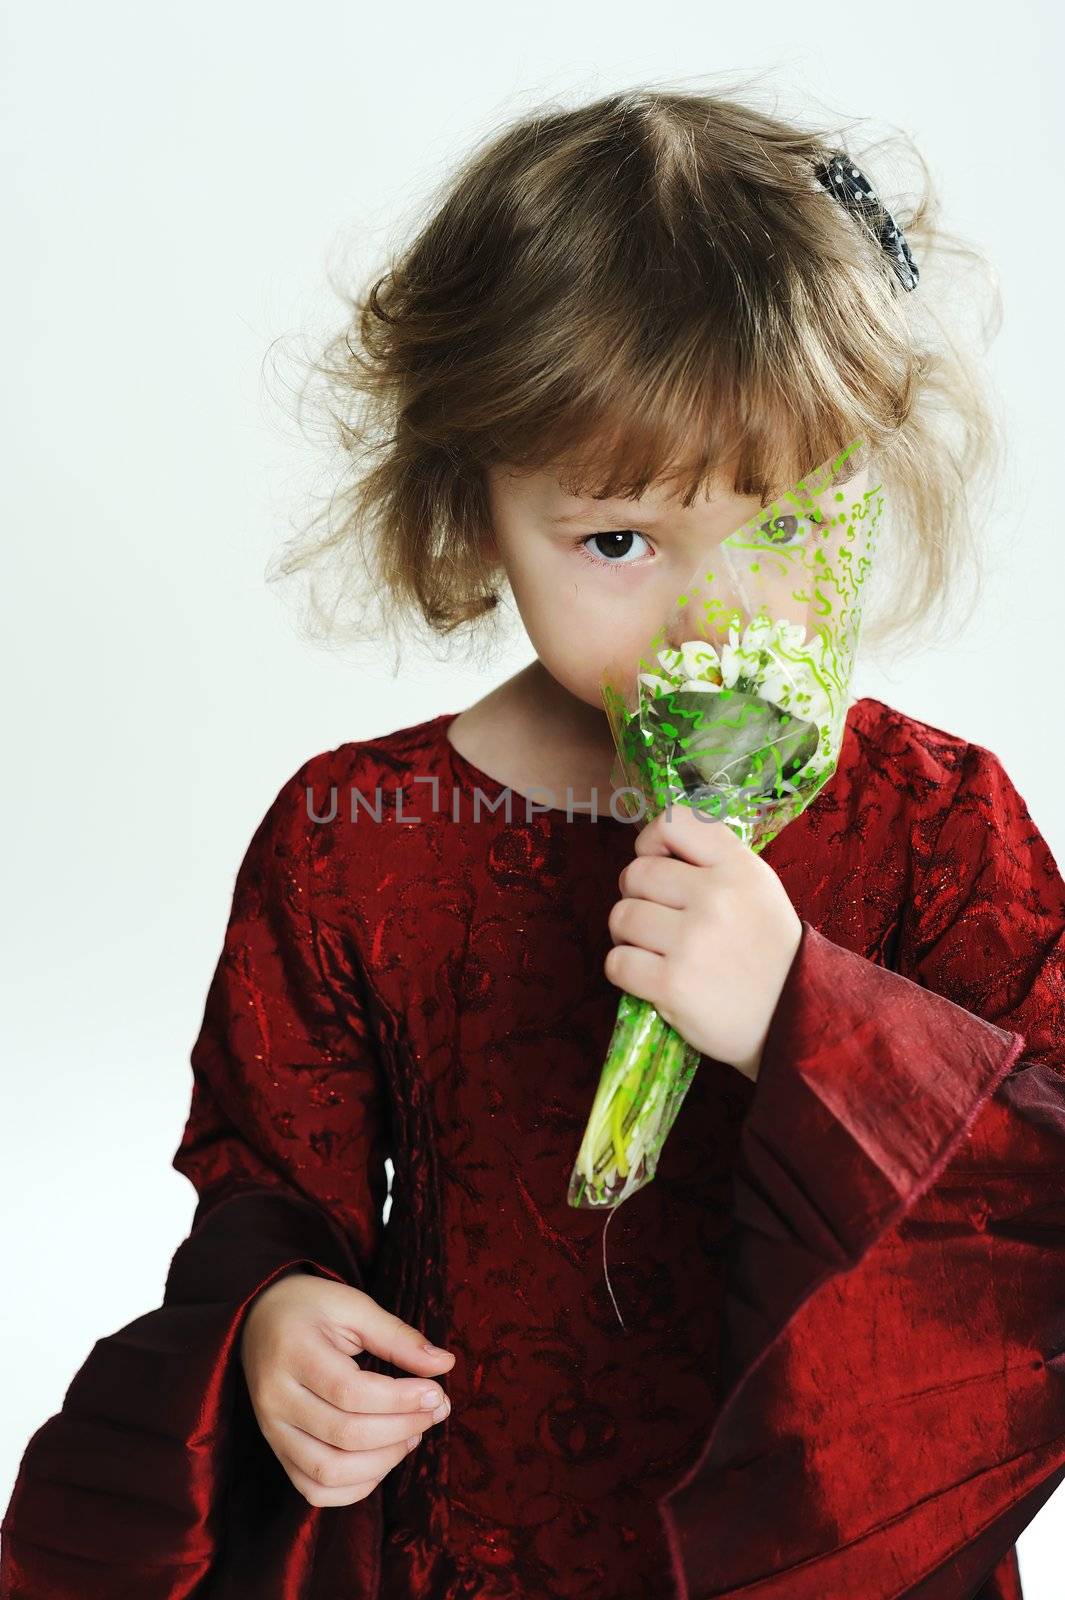 Little girl with flowers by velkol